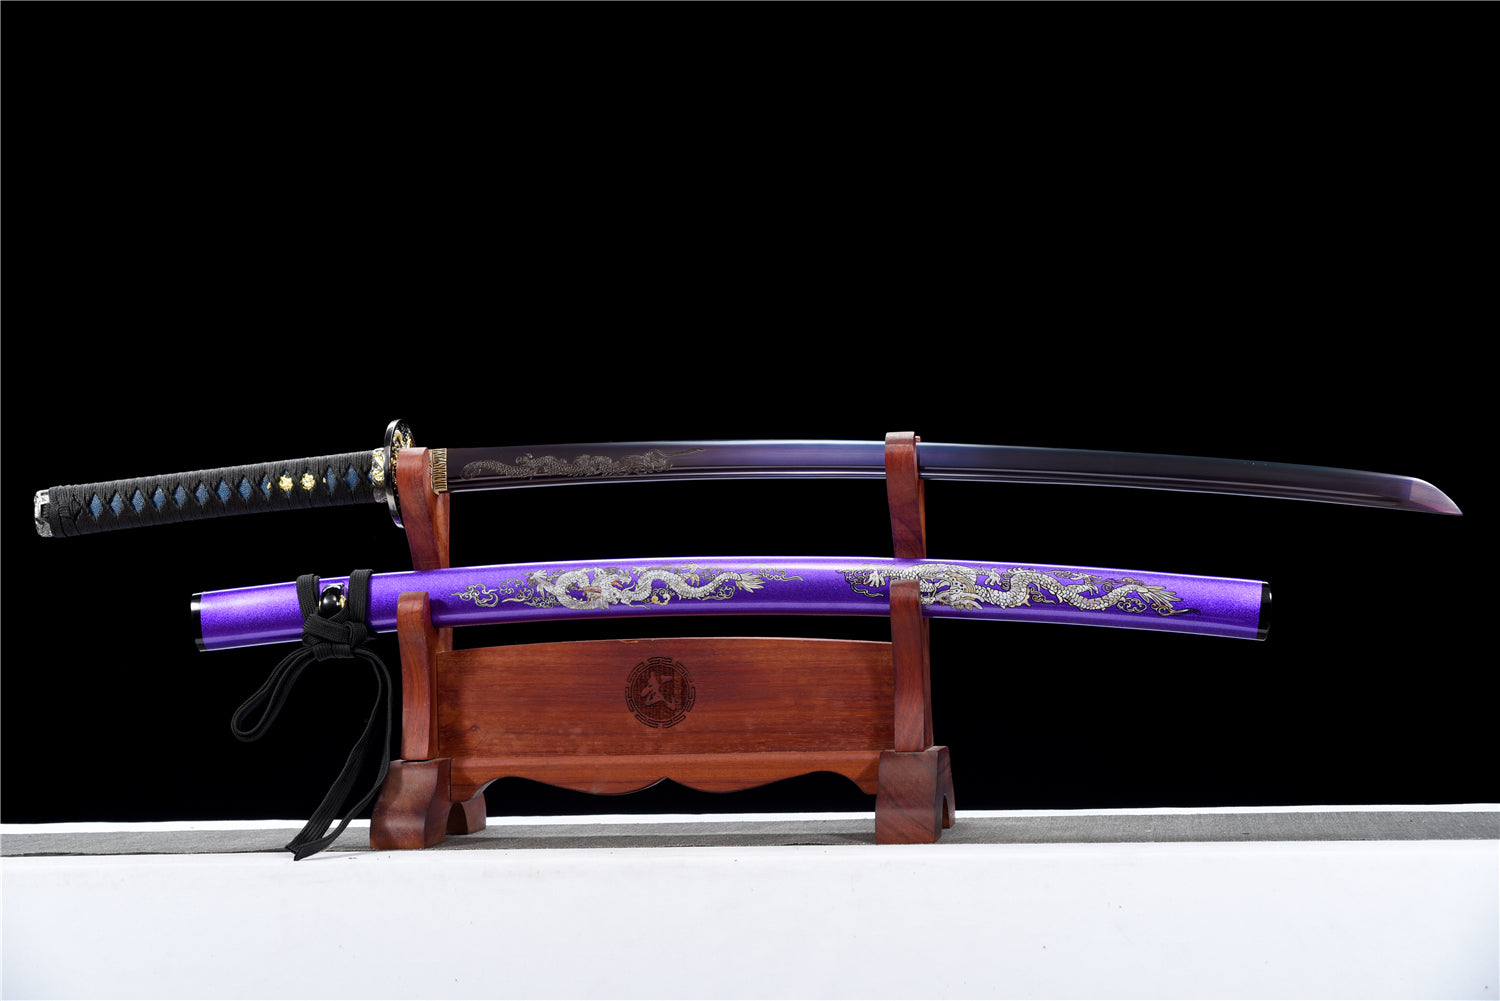 Handmade Katana Sword-Purple Glory Real Japanese Samurai Sword High-carbon steel Full Tang